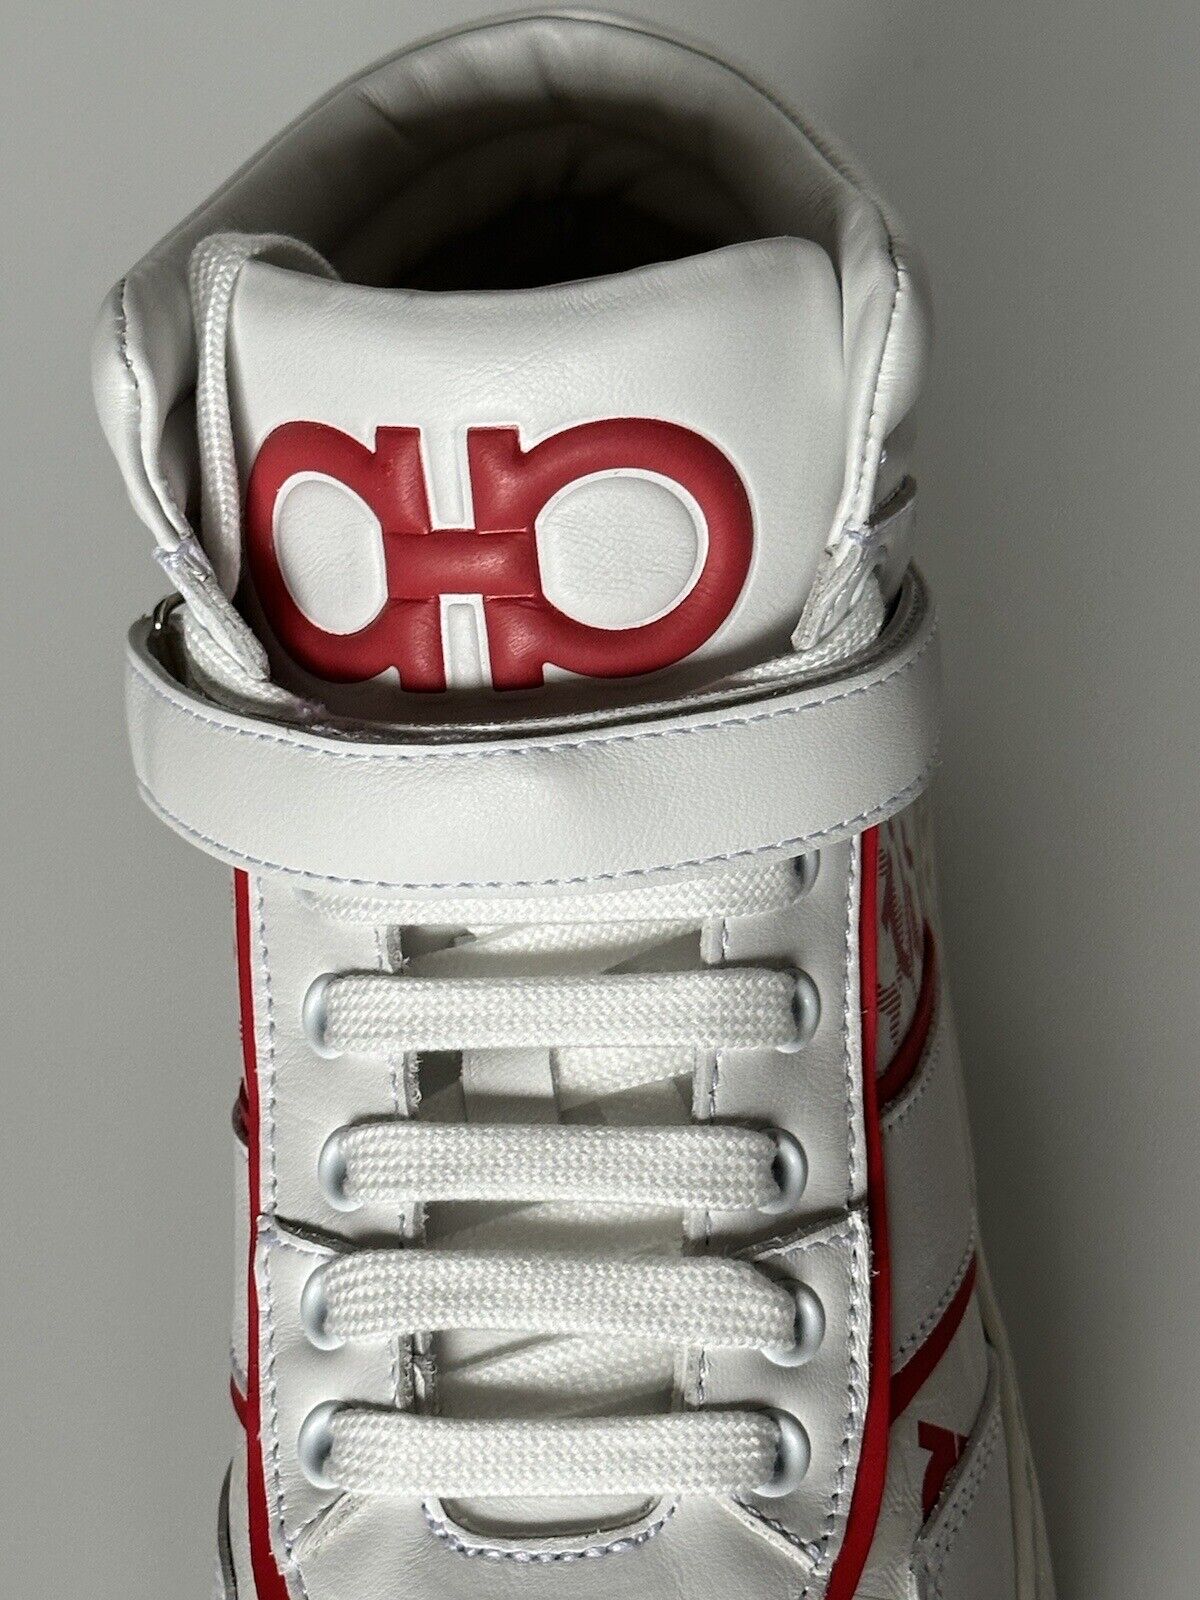 NIB Salvatore Ferragamo High Top Sneakers White Size 10 US 0756261 Made in Italy